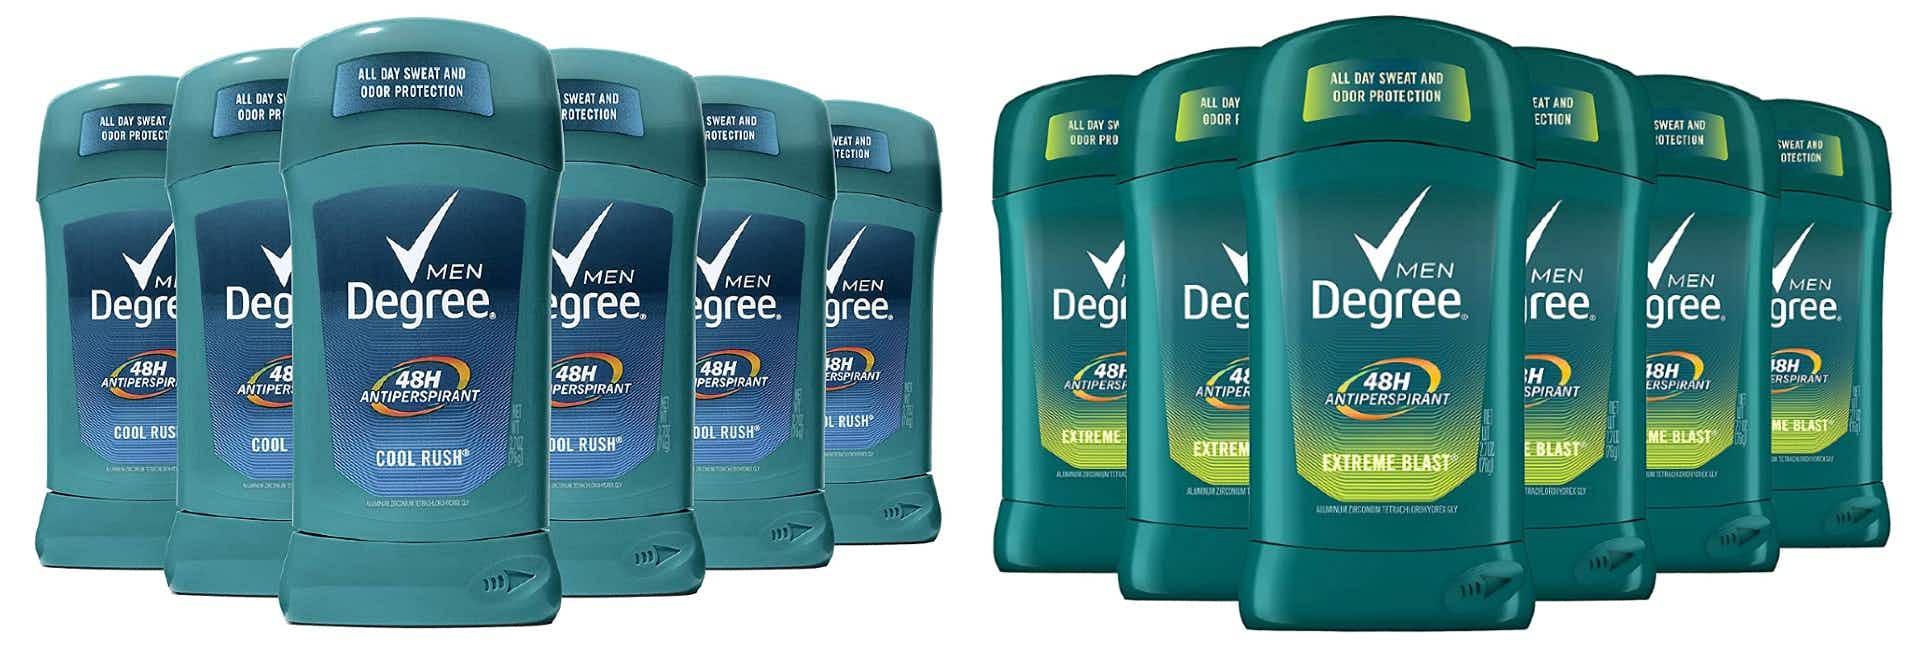 amazon-degree-men-deodorant-6-pack